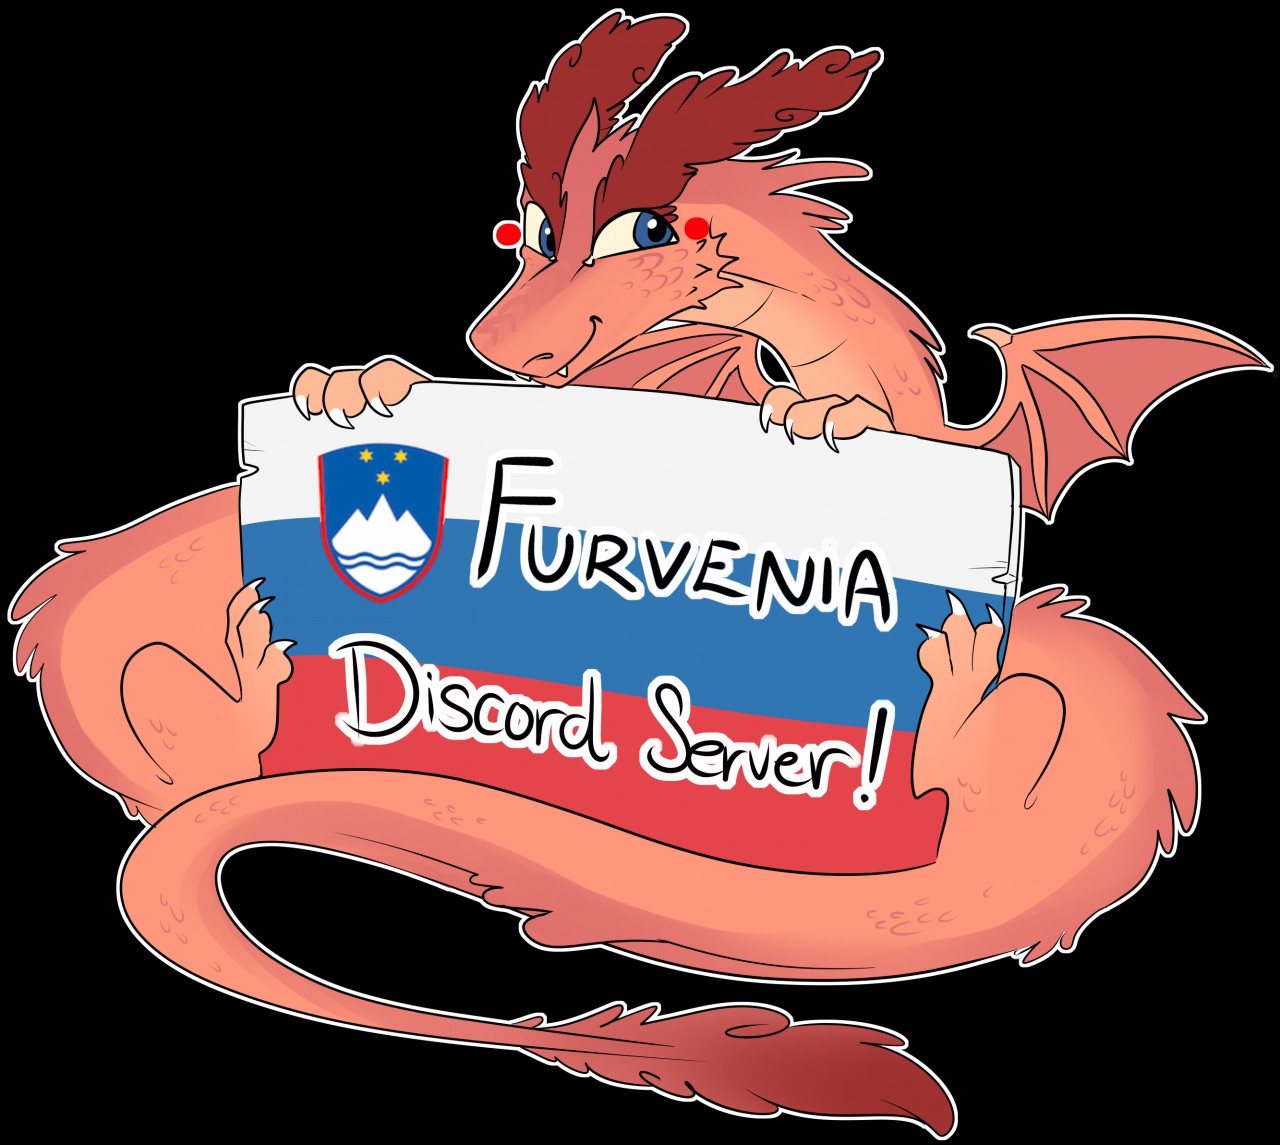 Dating server furry discord Discord Server